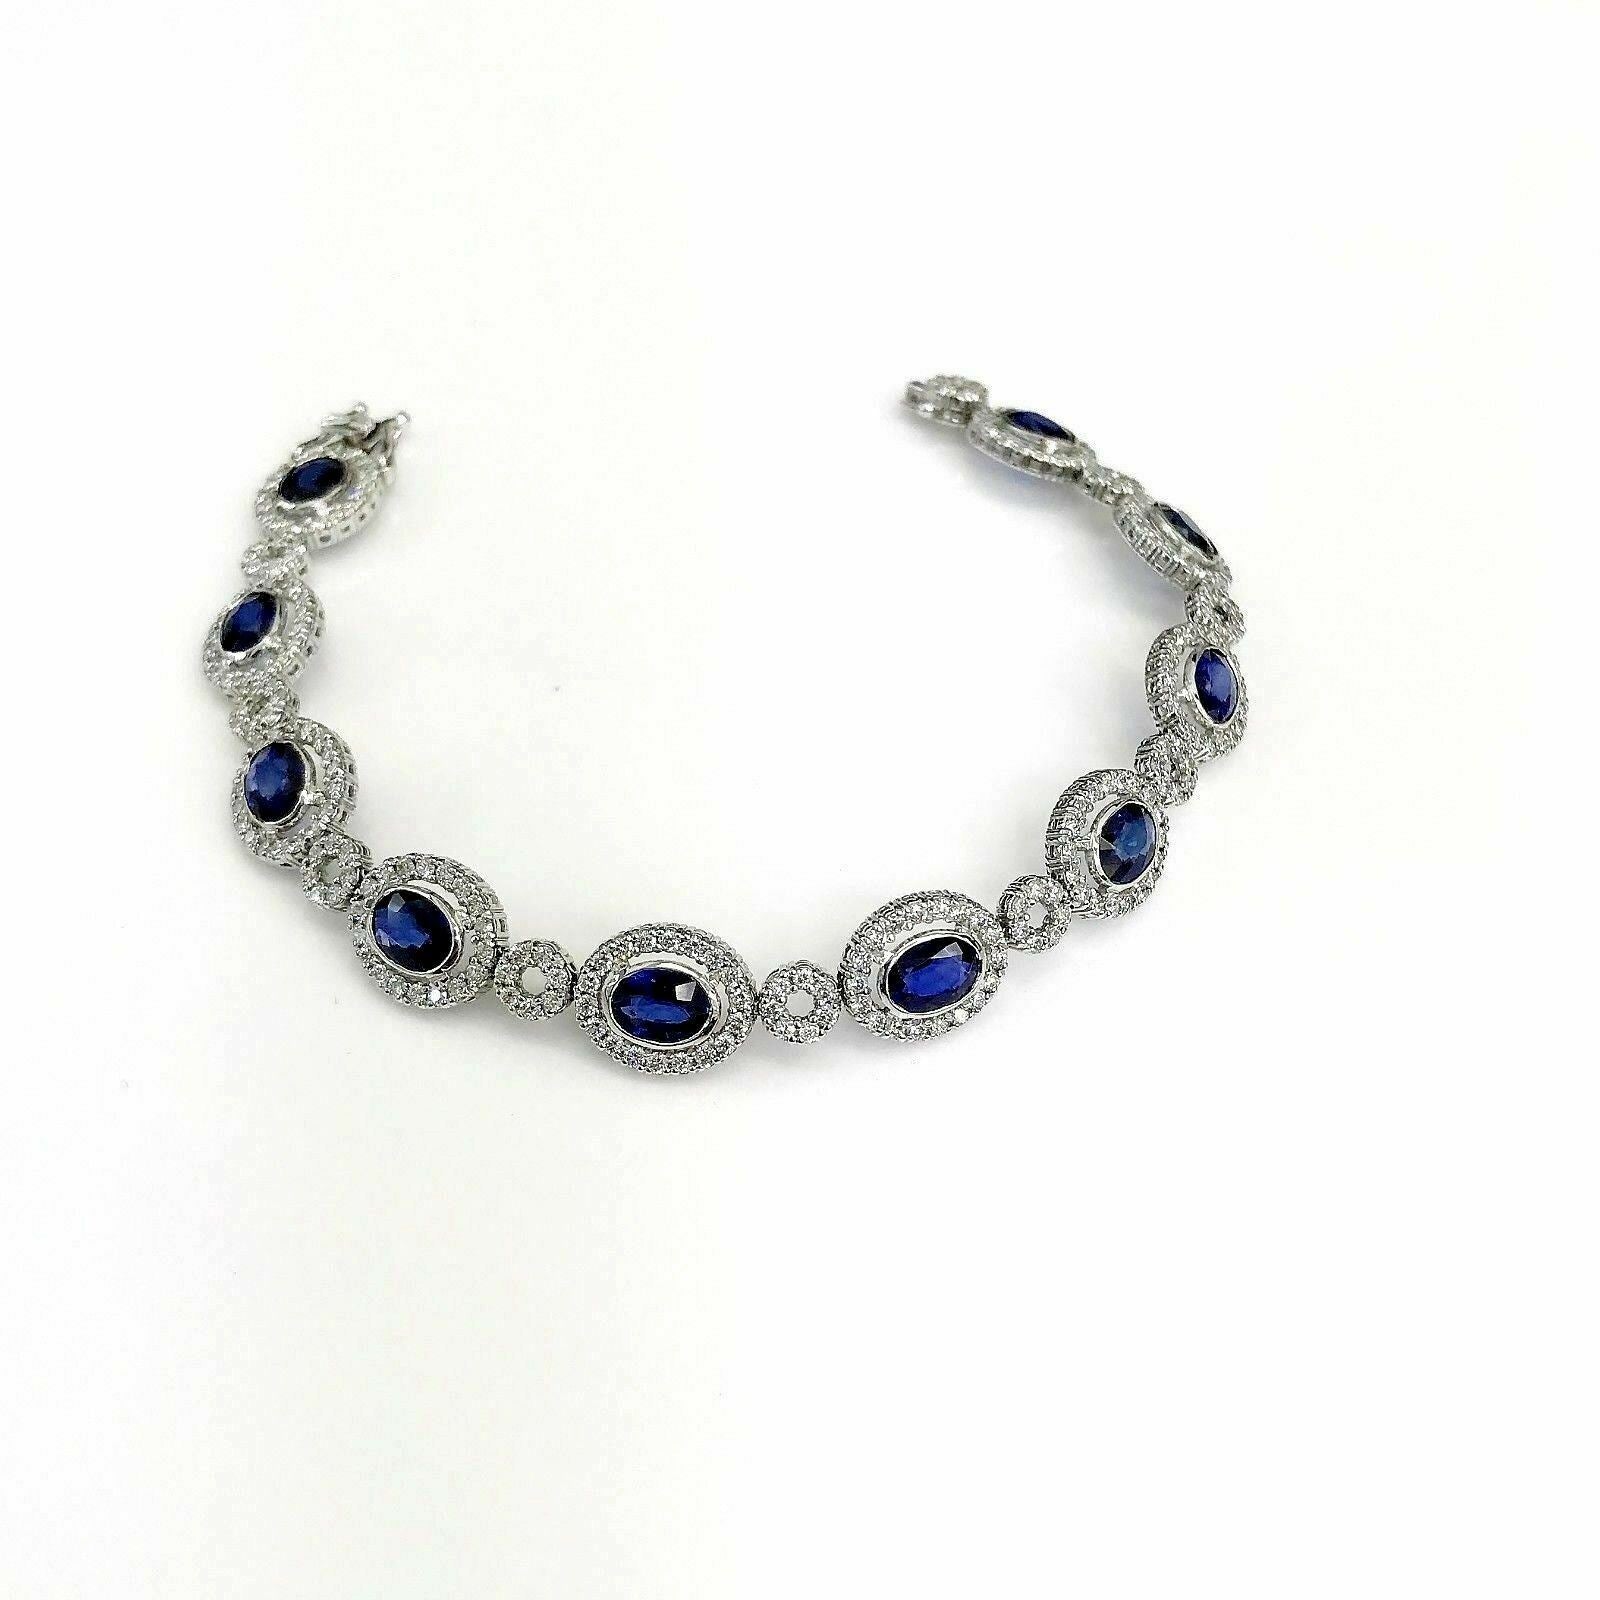 11.91 Carats Blue Sapphire and Diamond Tennis Bracelet 14K White Gold